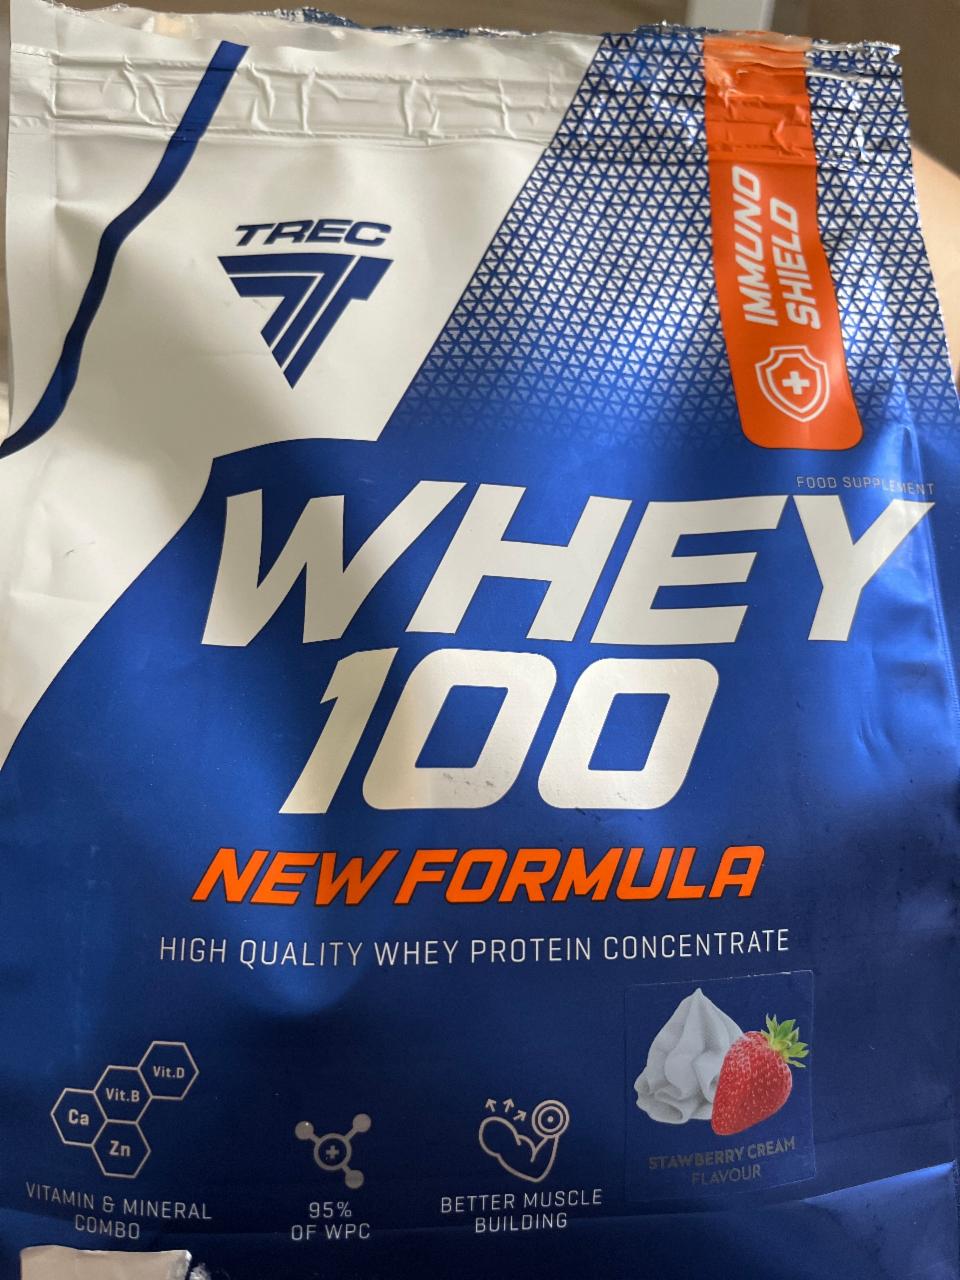 Фото - Protein Whey 100 new formula strawberry cream flavour Trec